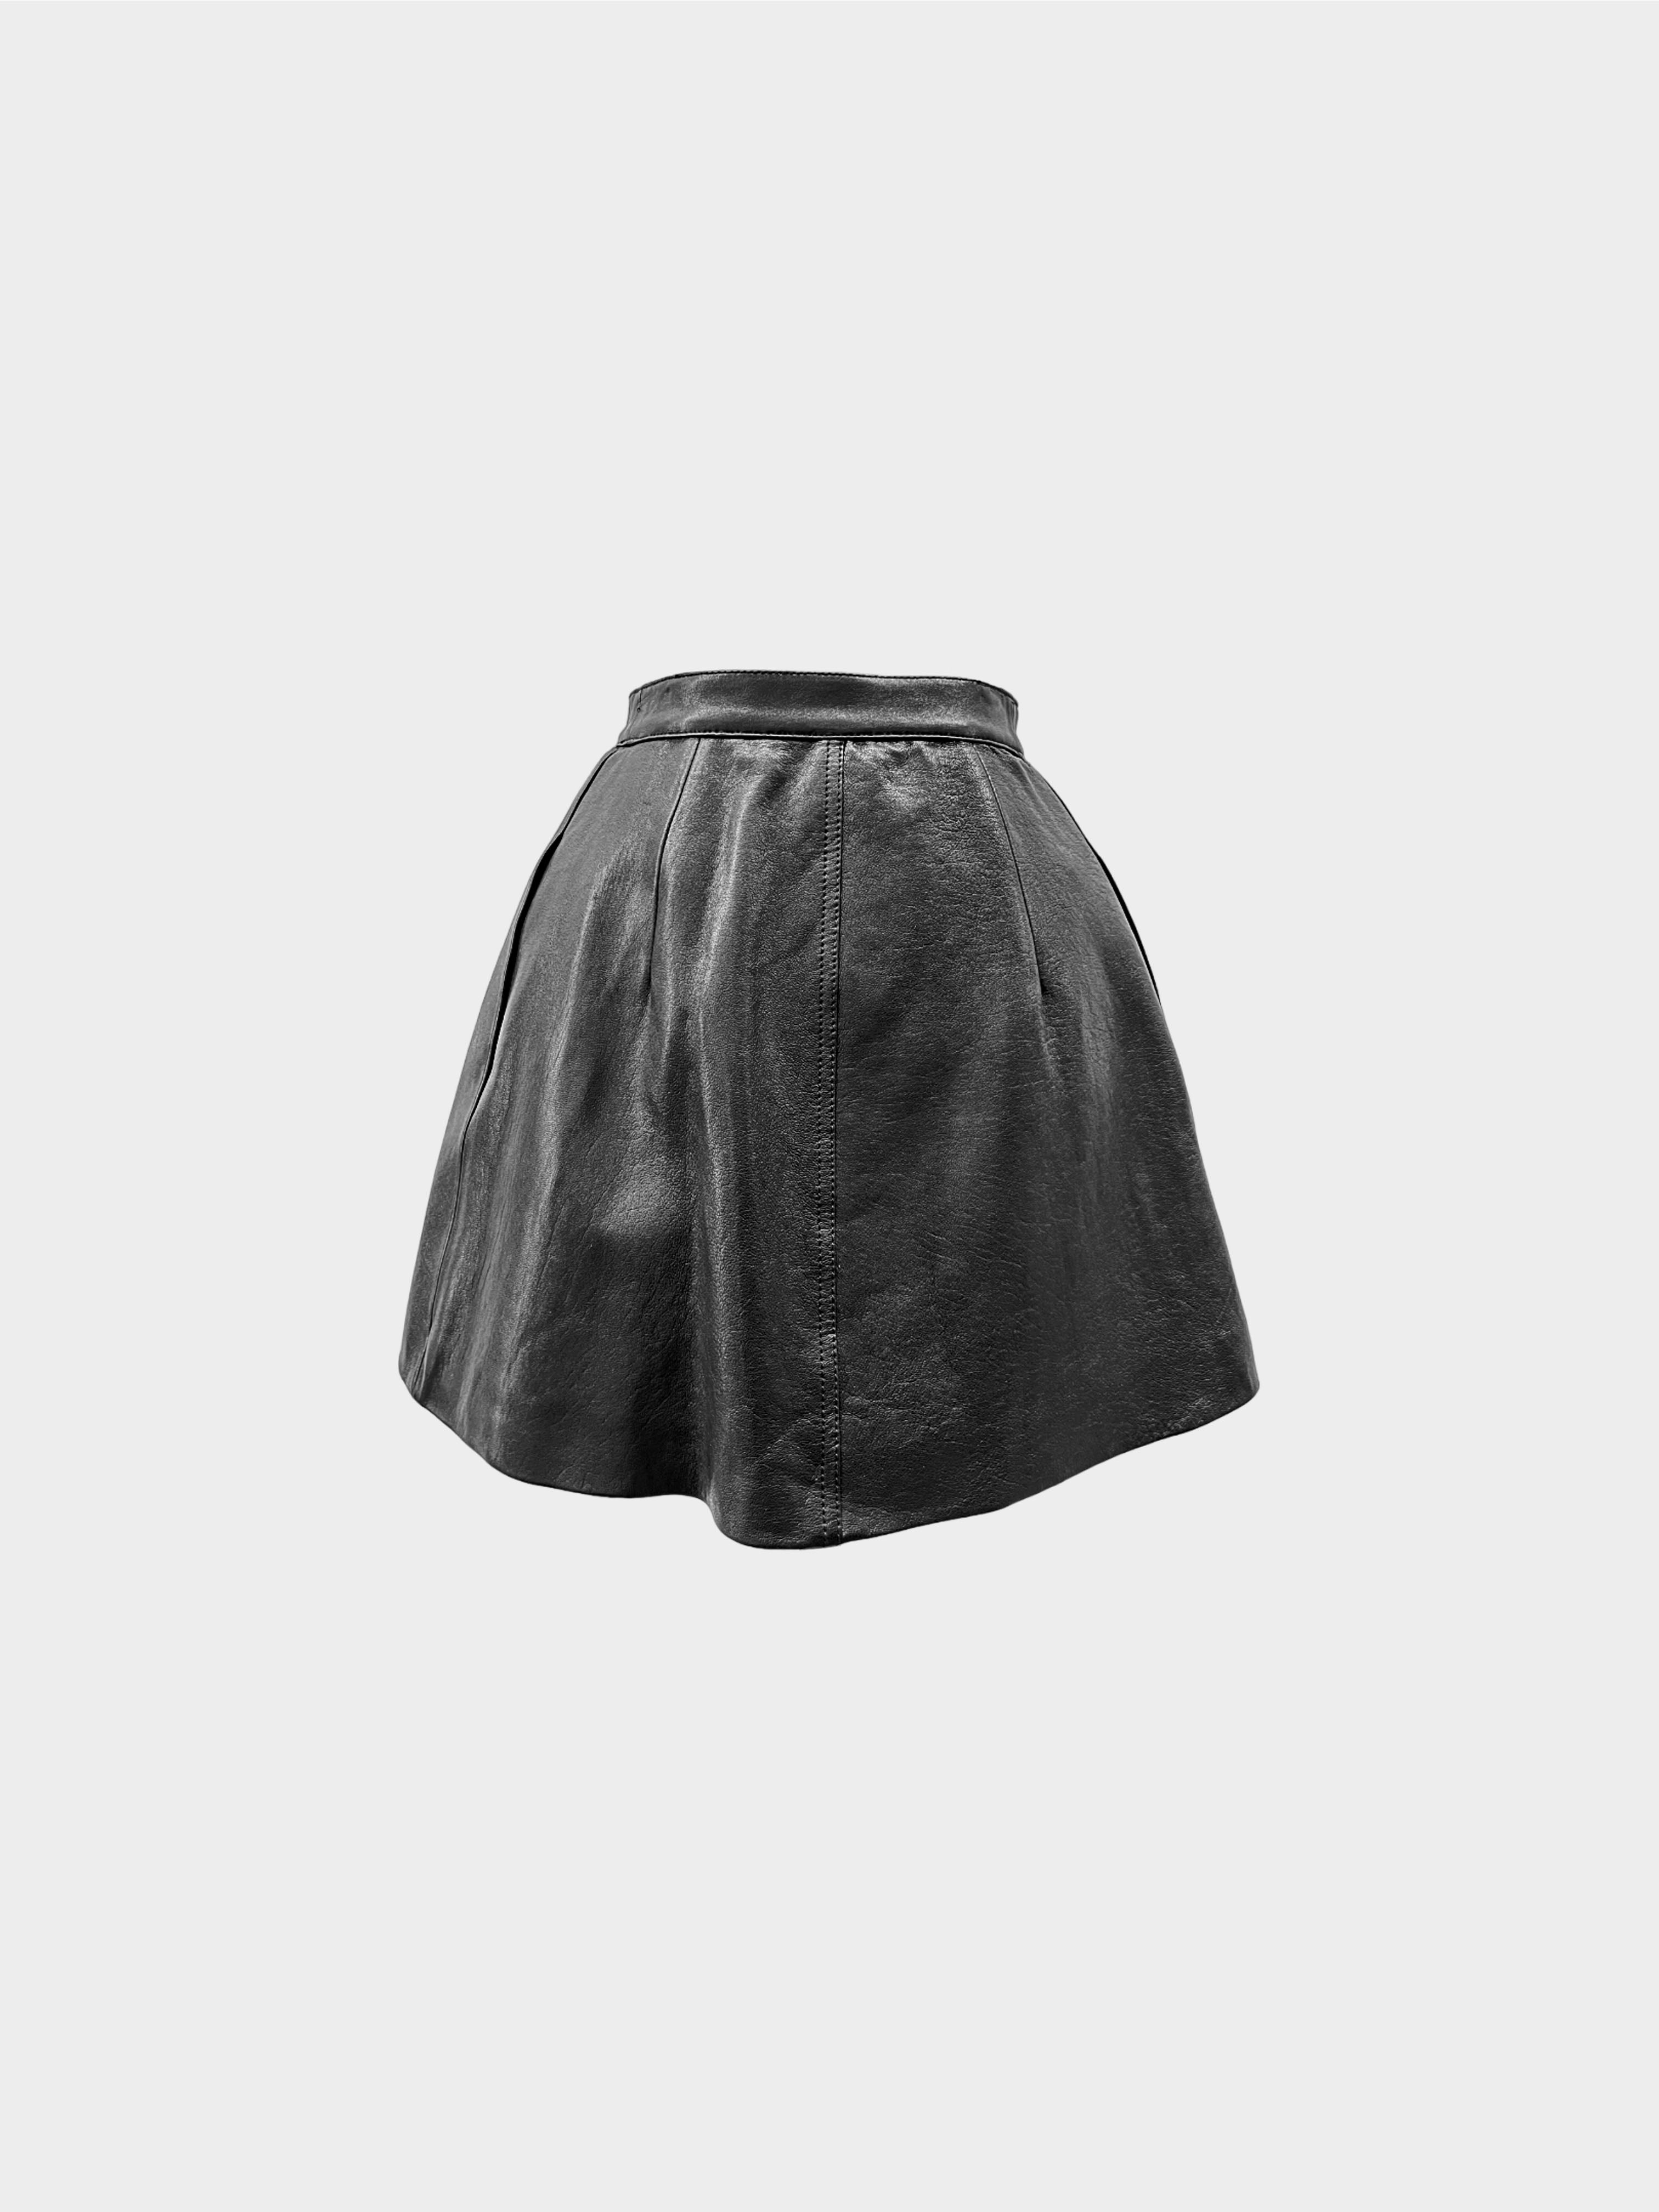 Christian Dior 2020 Black Lambskin Leather Mini Skirt with Pockets